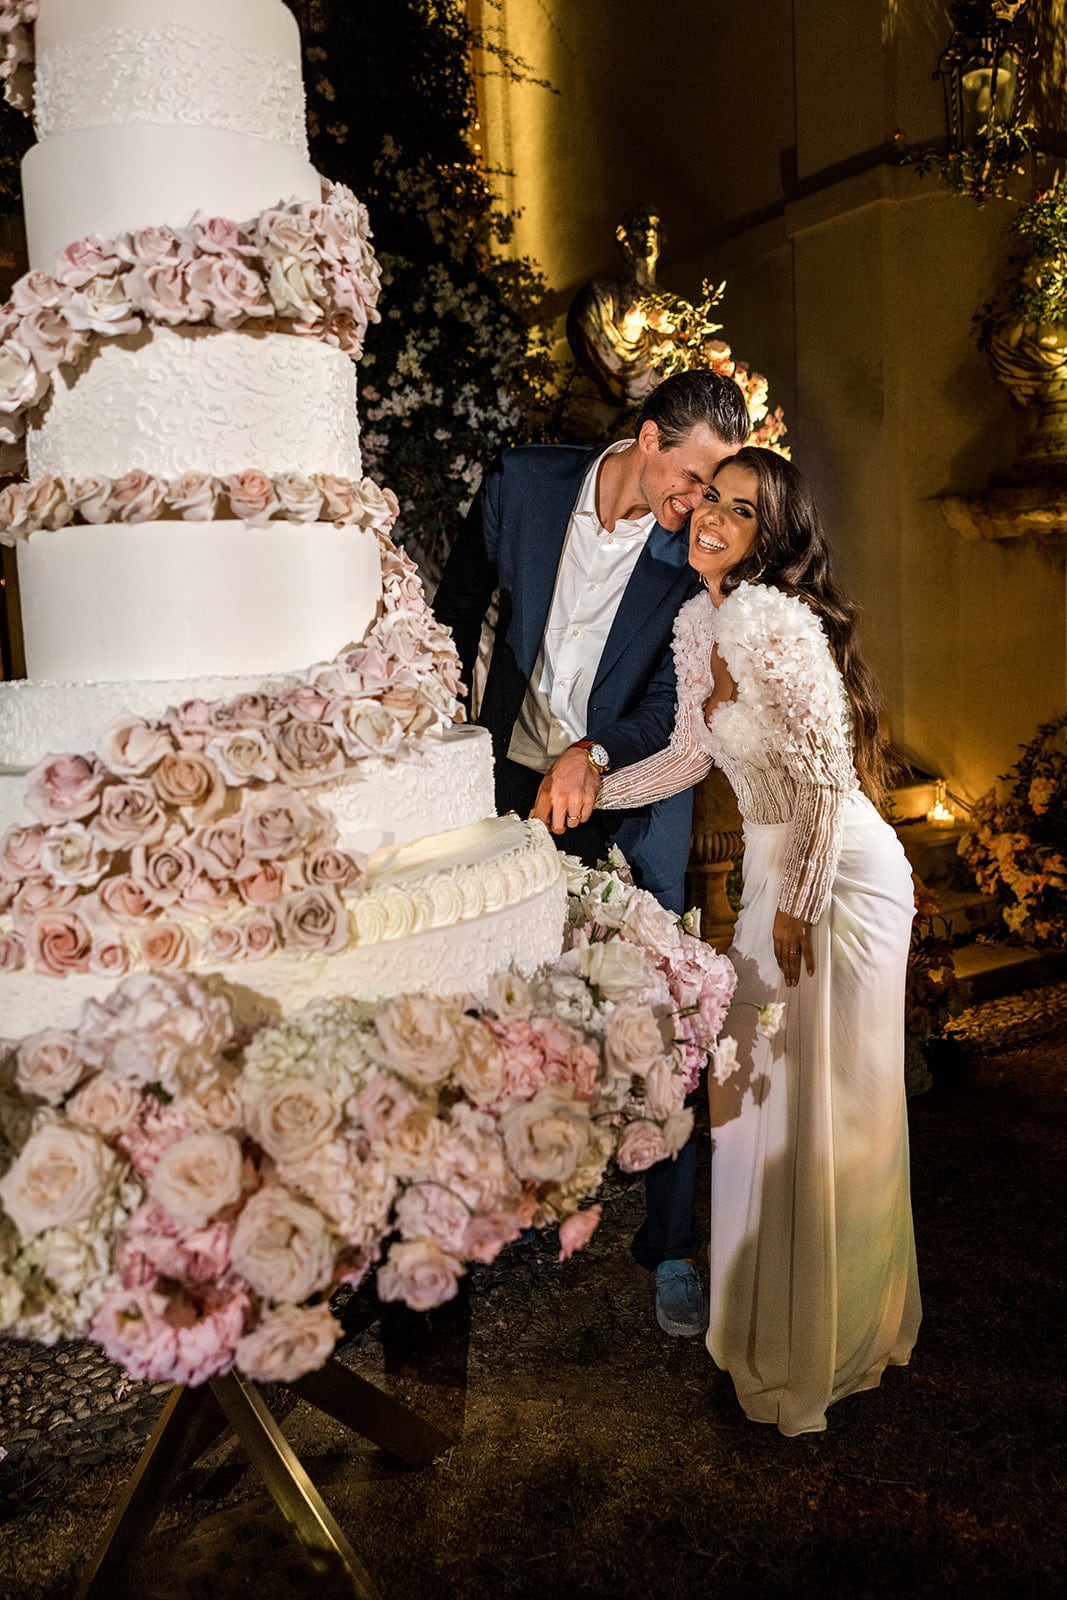 Bride and groom cut massive wedding cake together